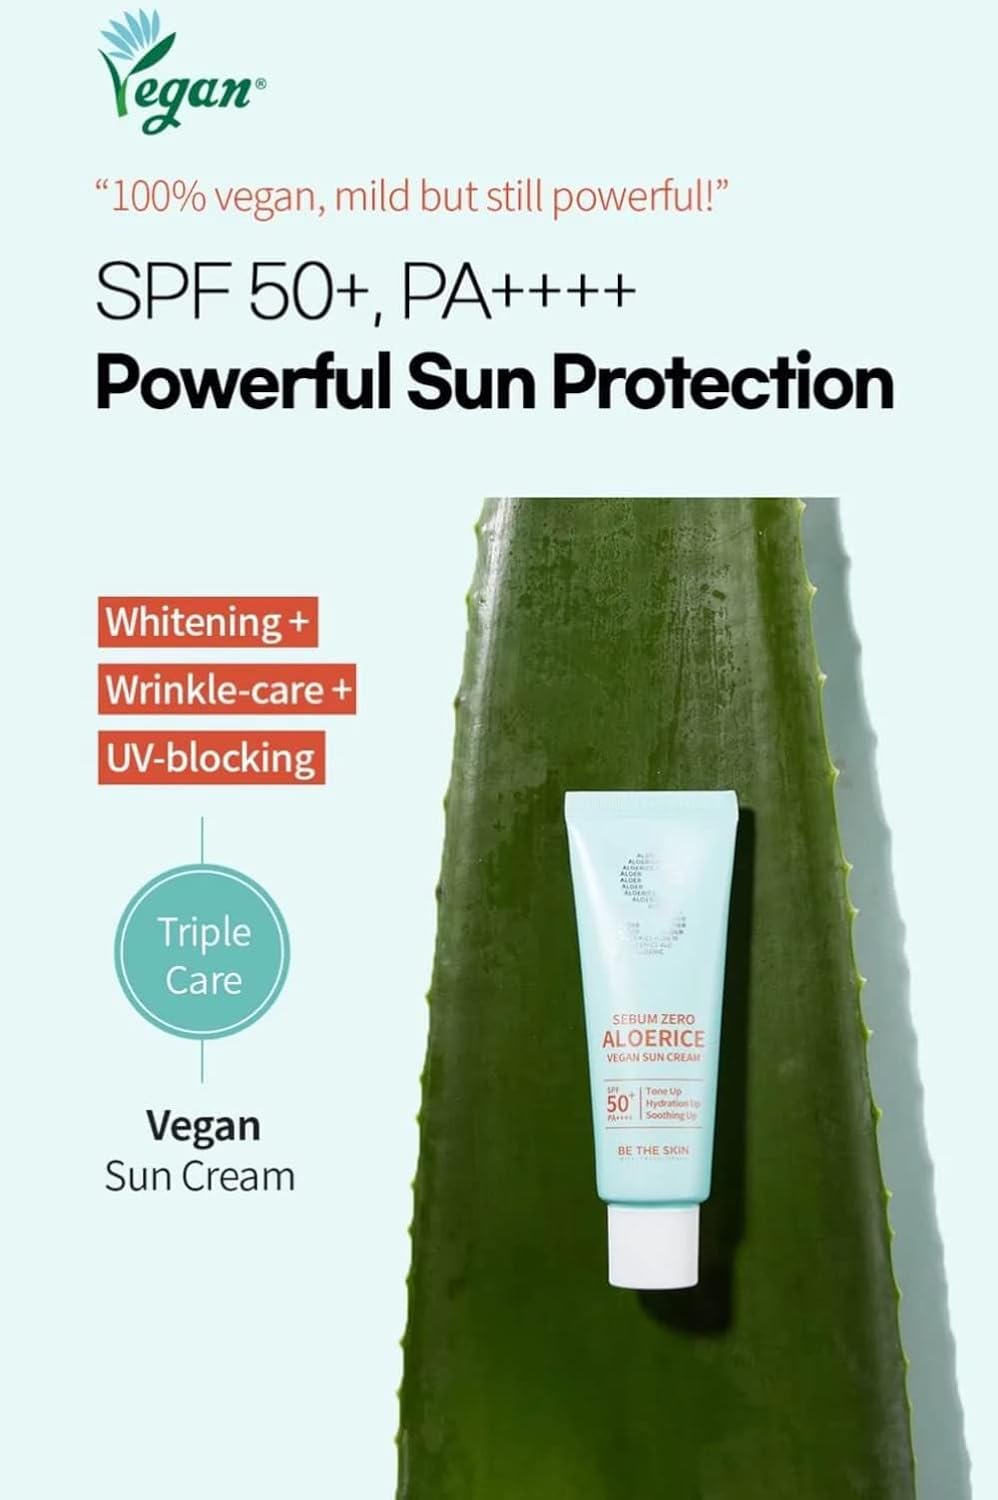 Be The Skin Sebum Zero Aloerice Vegan SPF50+ Sun Cream 50ml